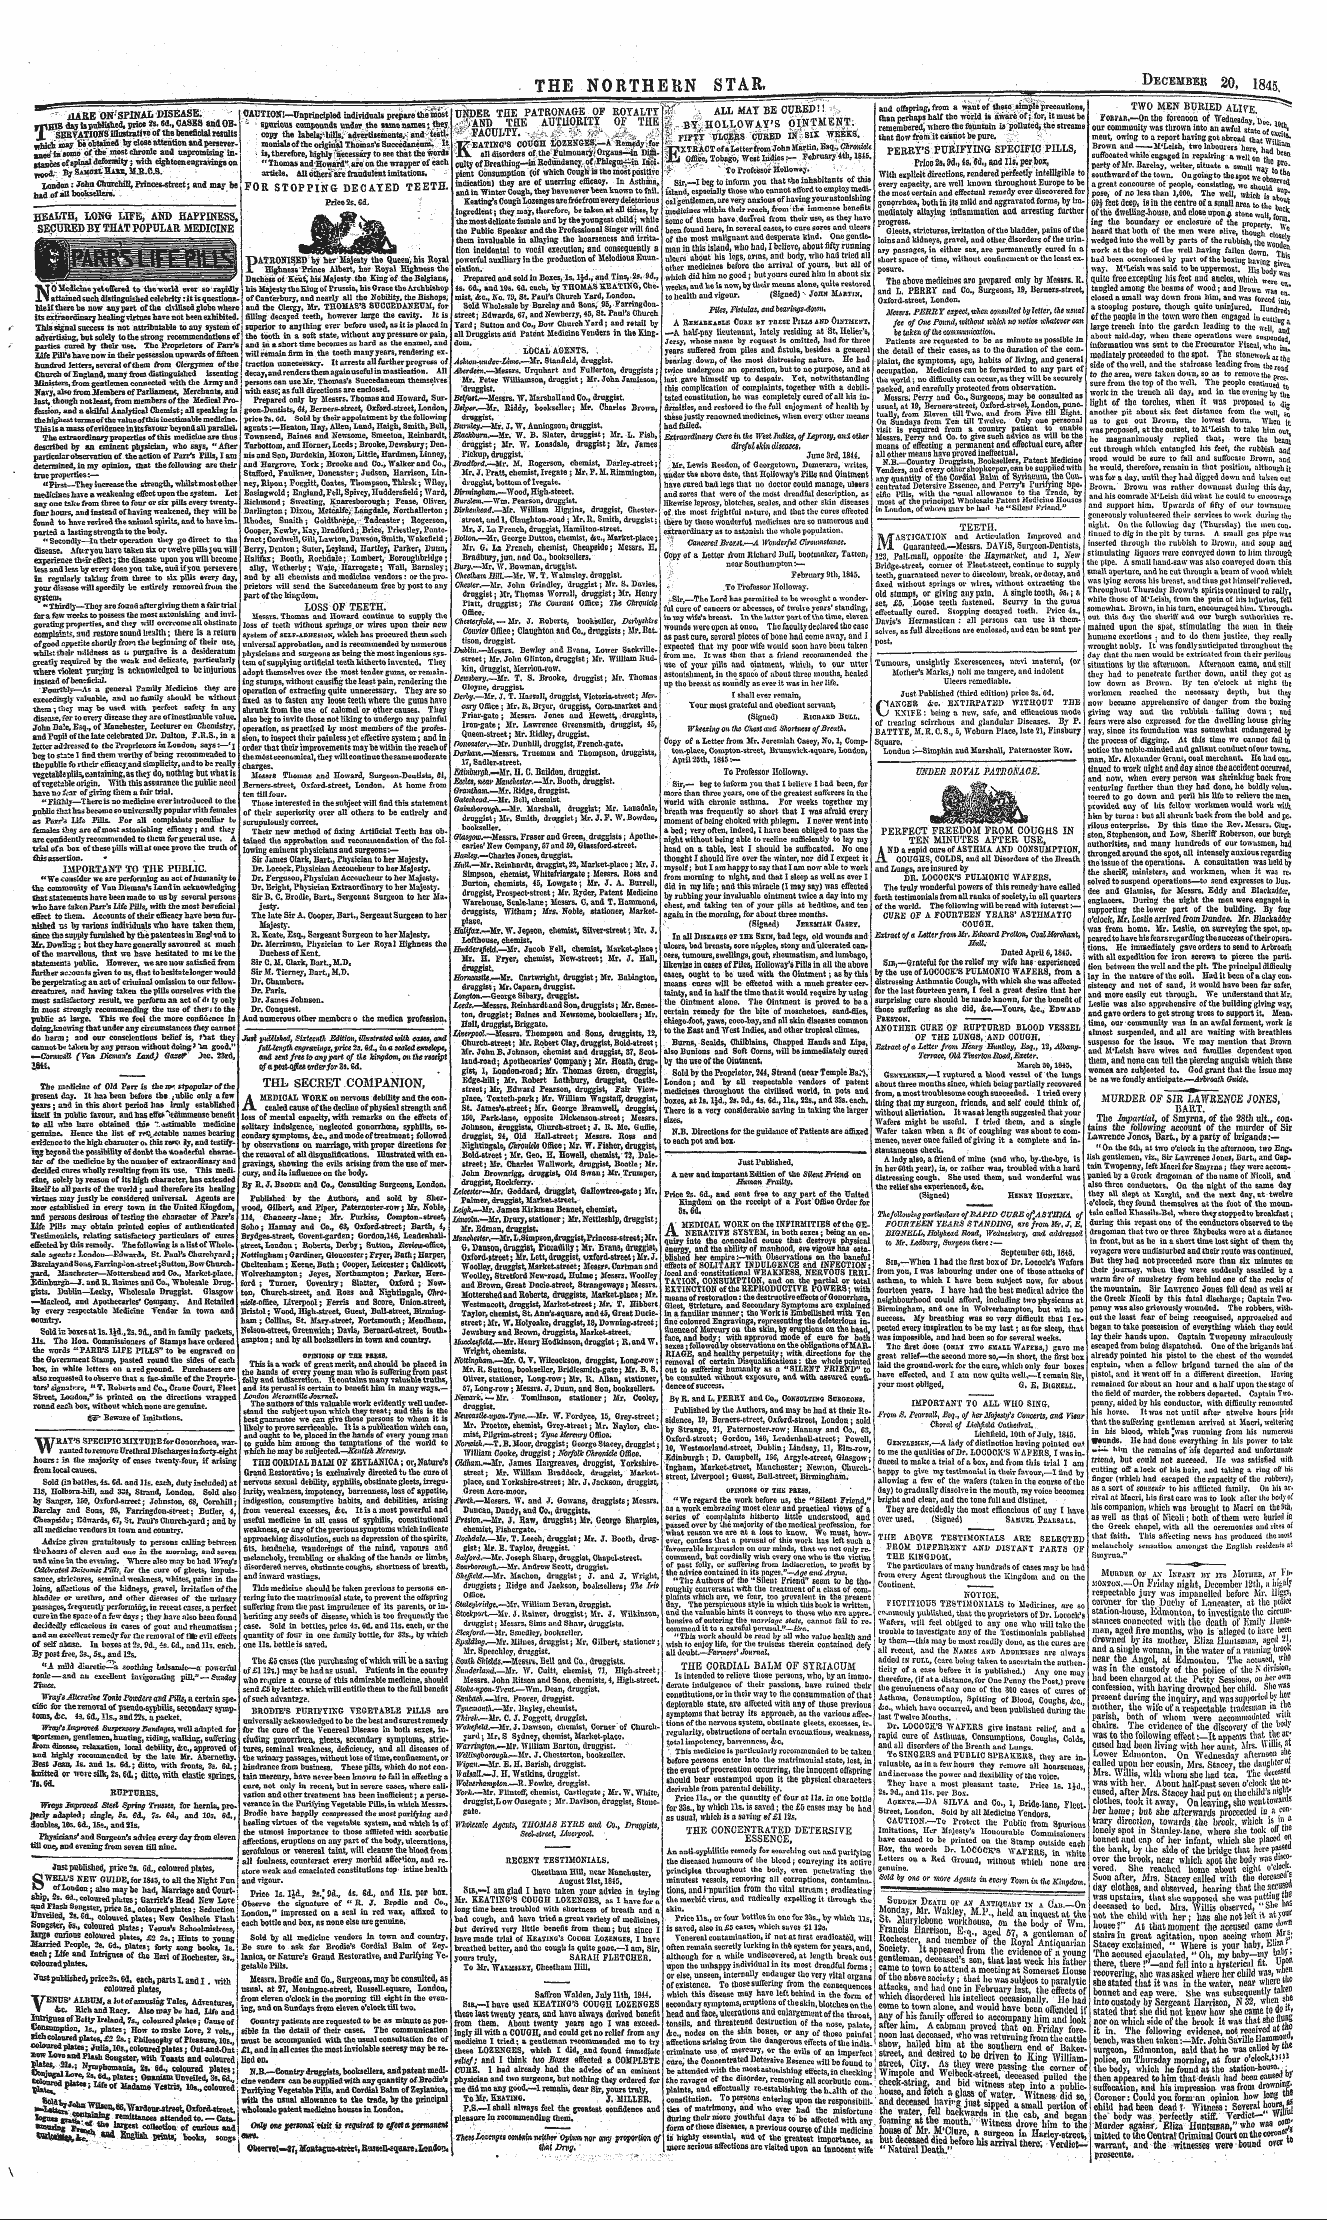 Northern Star (1837-1852): jS F Y, 4th edition - Ad00209